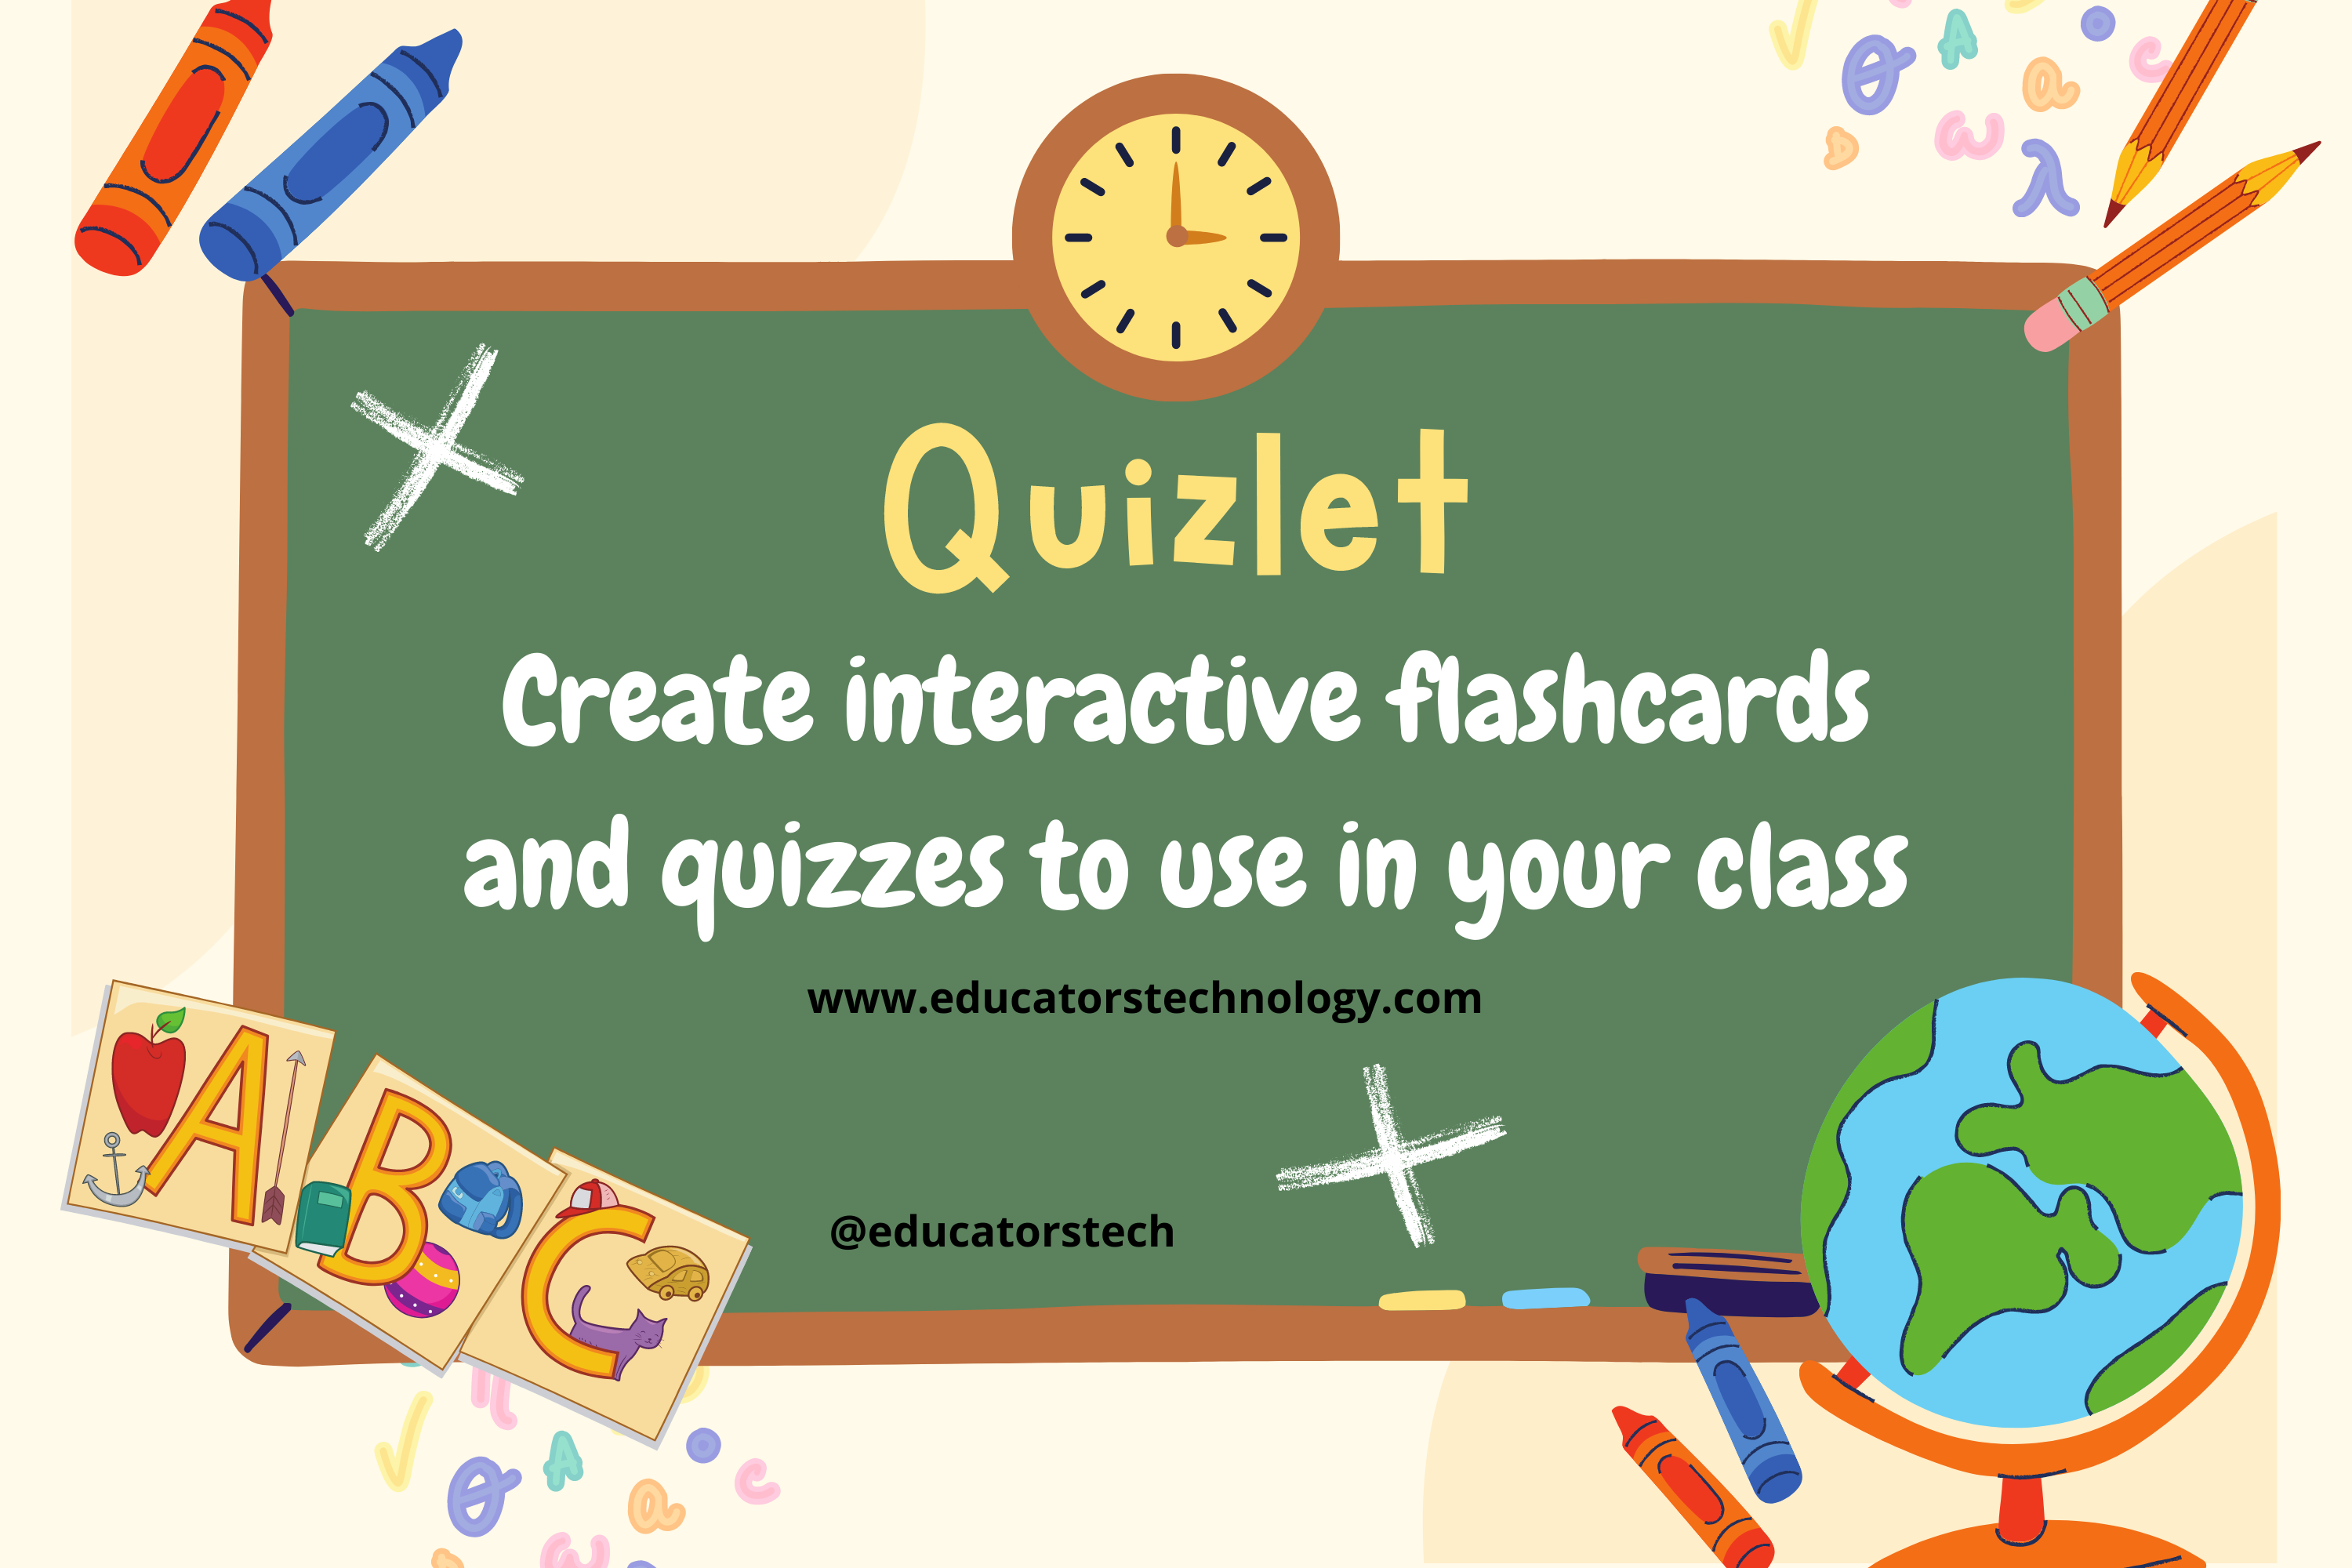 Quizlet guide for teachers